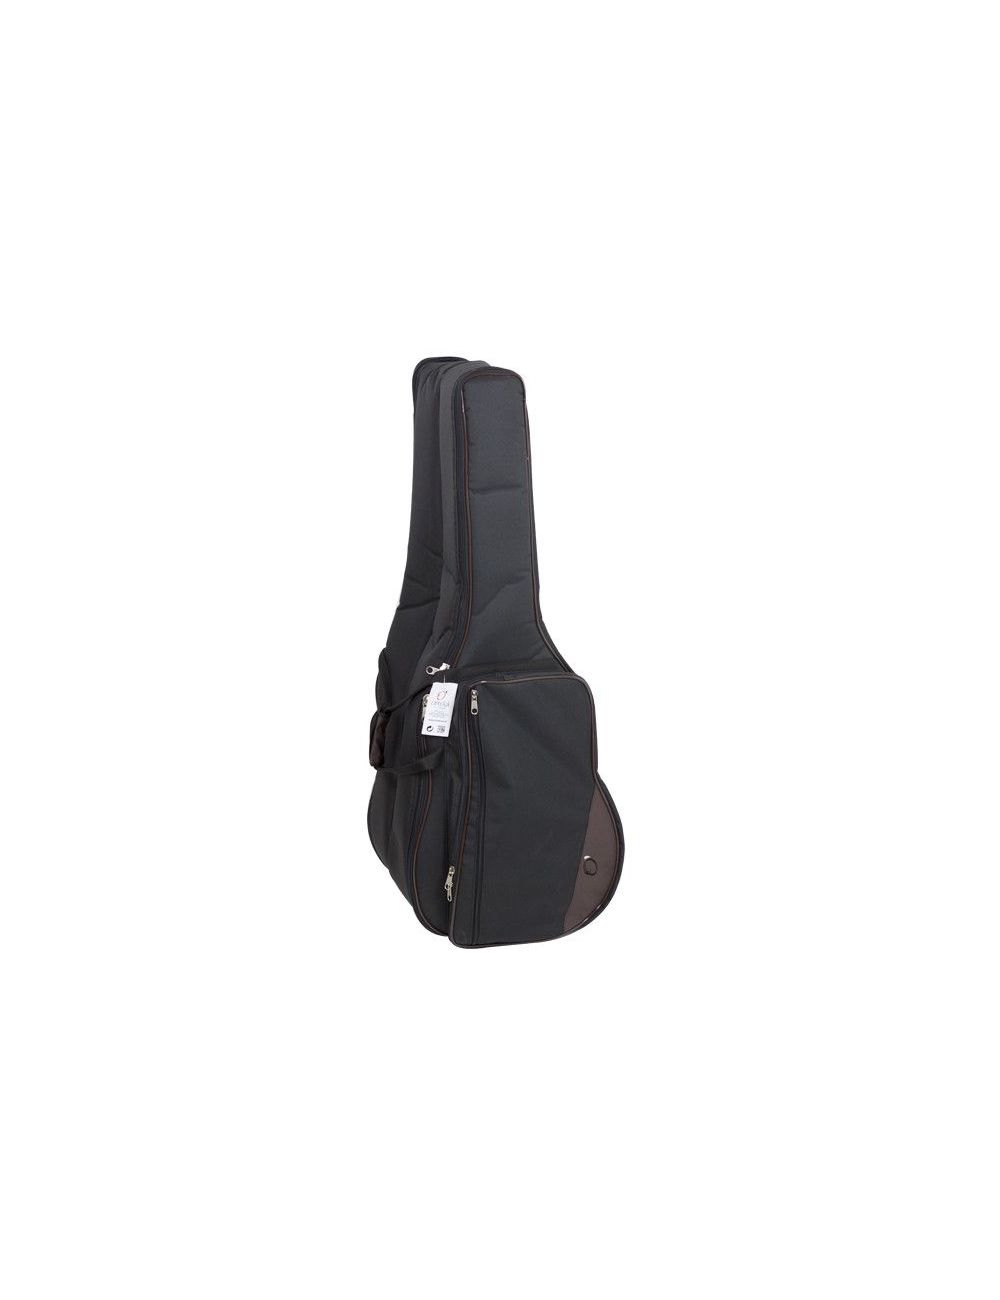 Ortola 4205 Gig Bag for 2 classical guitars 4205-203 Classical and flamenco